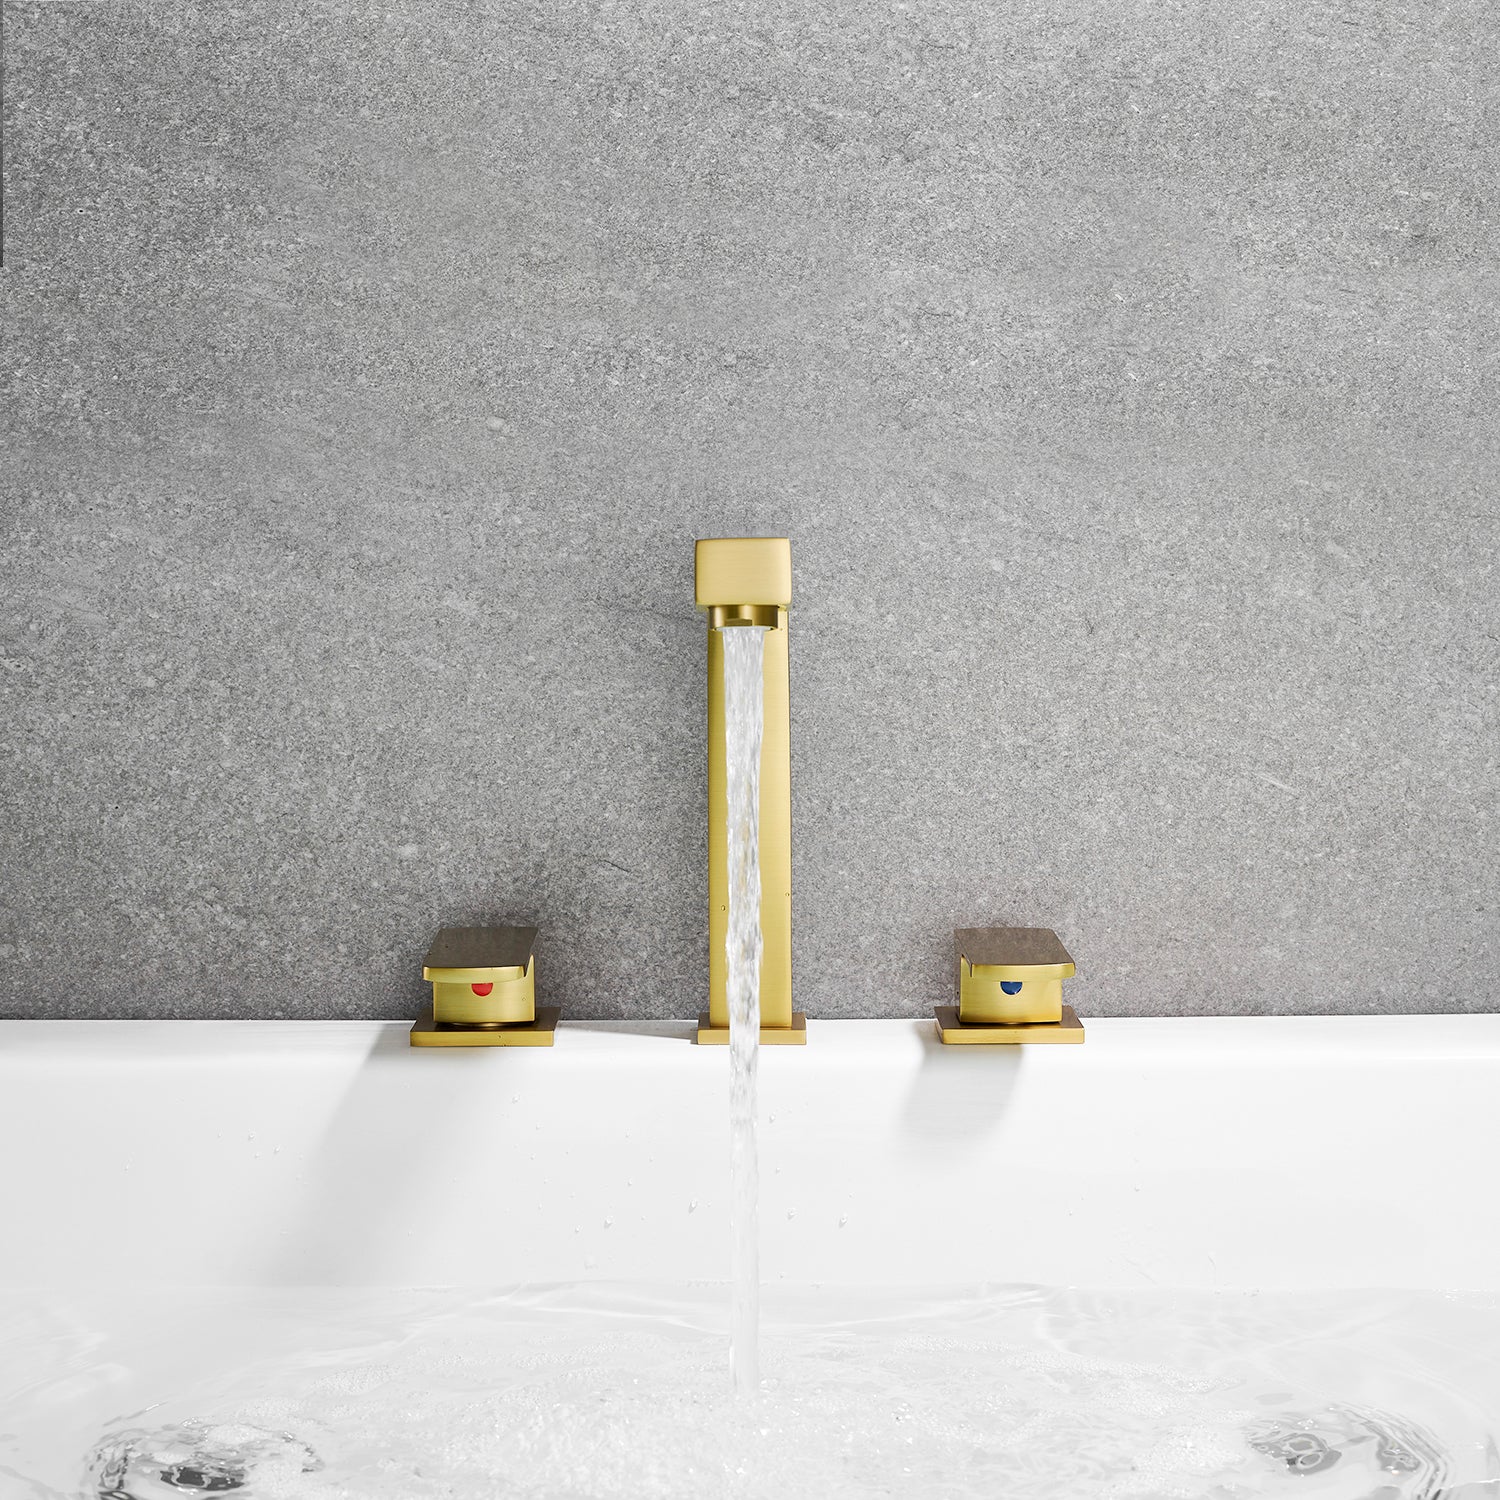 Calden Double Handle Deck-Mount 8 in. Widespread Roman Tub Faucet